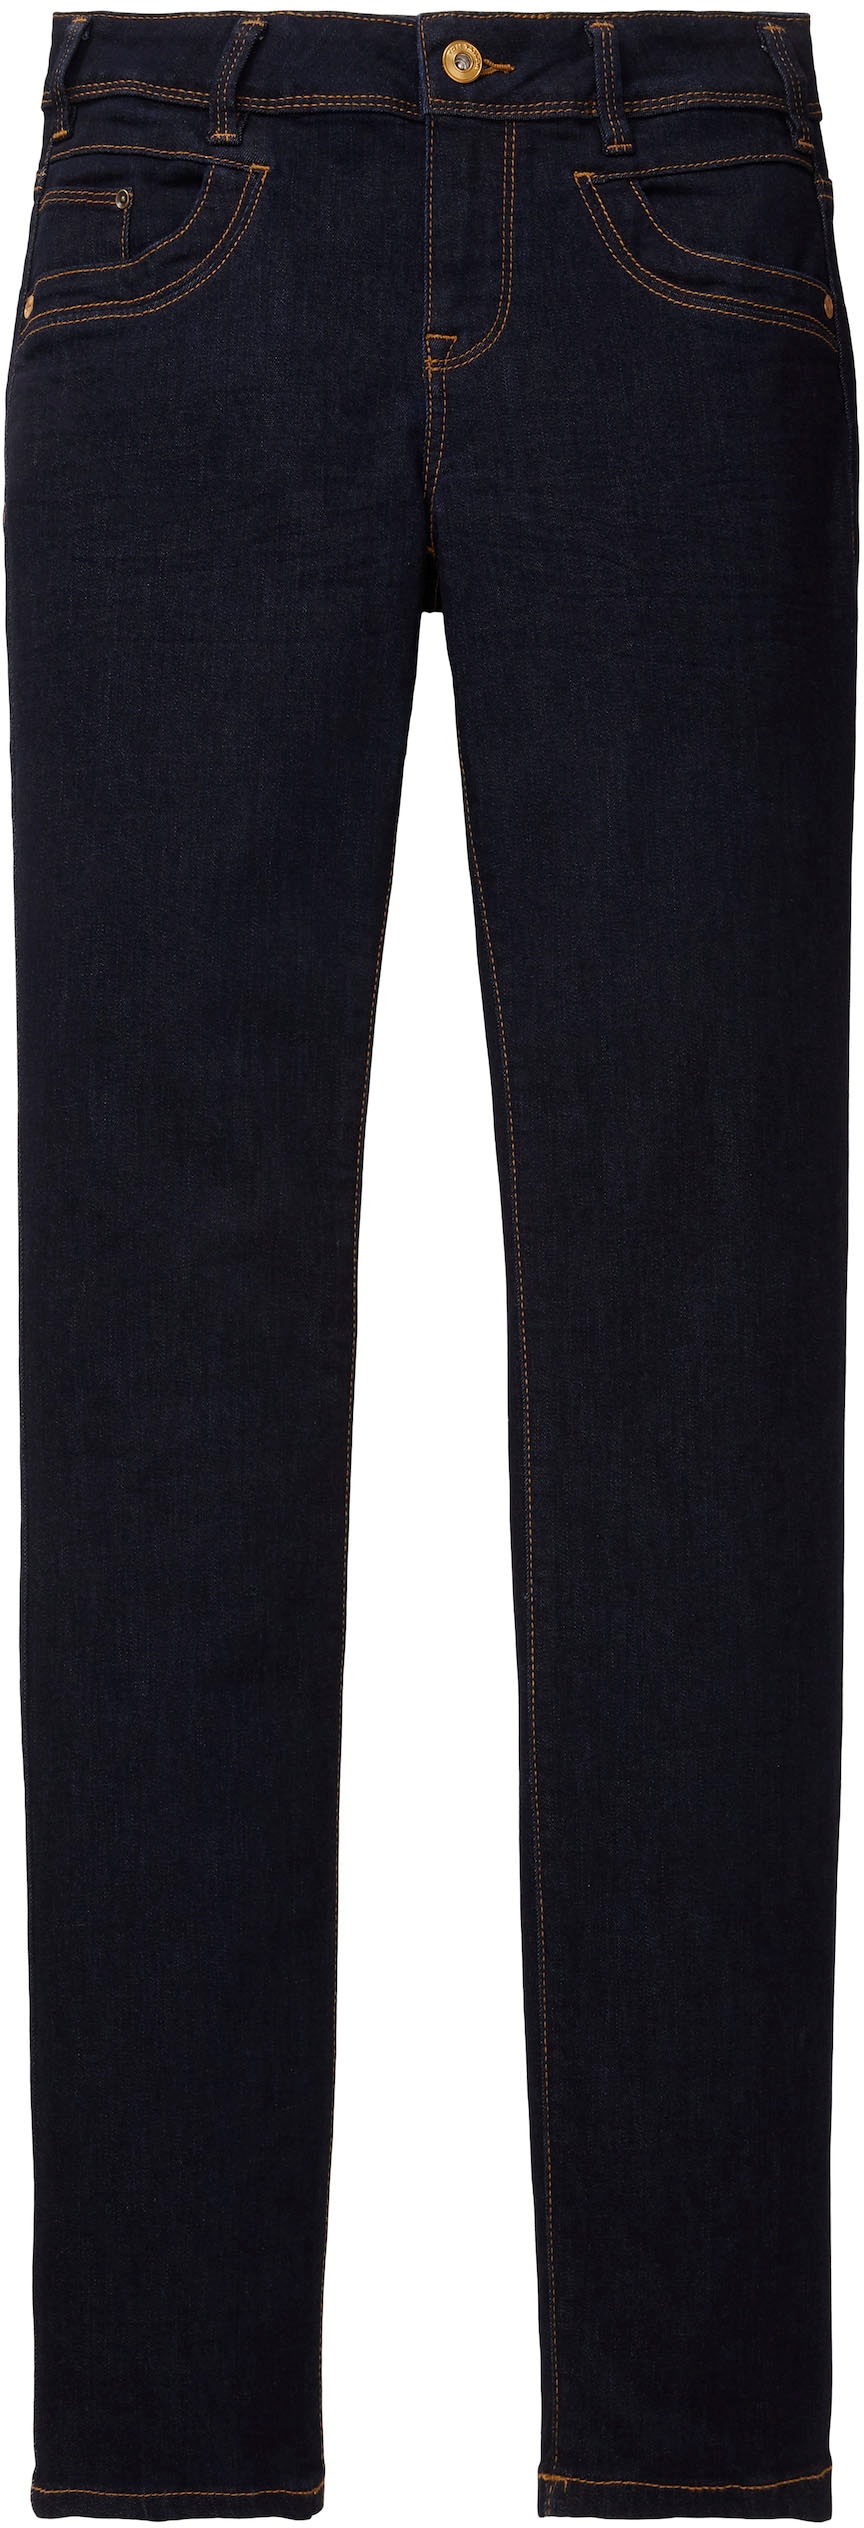 TOM TAILOR Gerade Jeans, mit bestellen Kontrastnähten jetzt